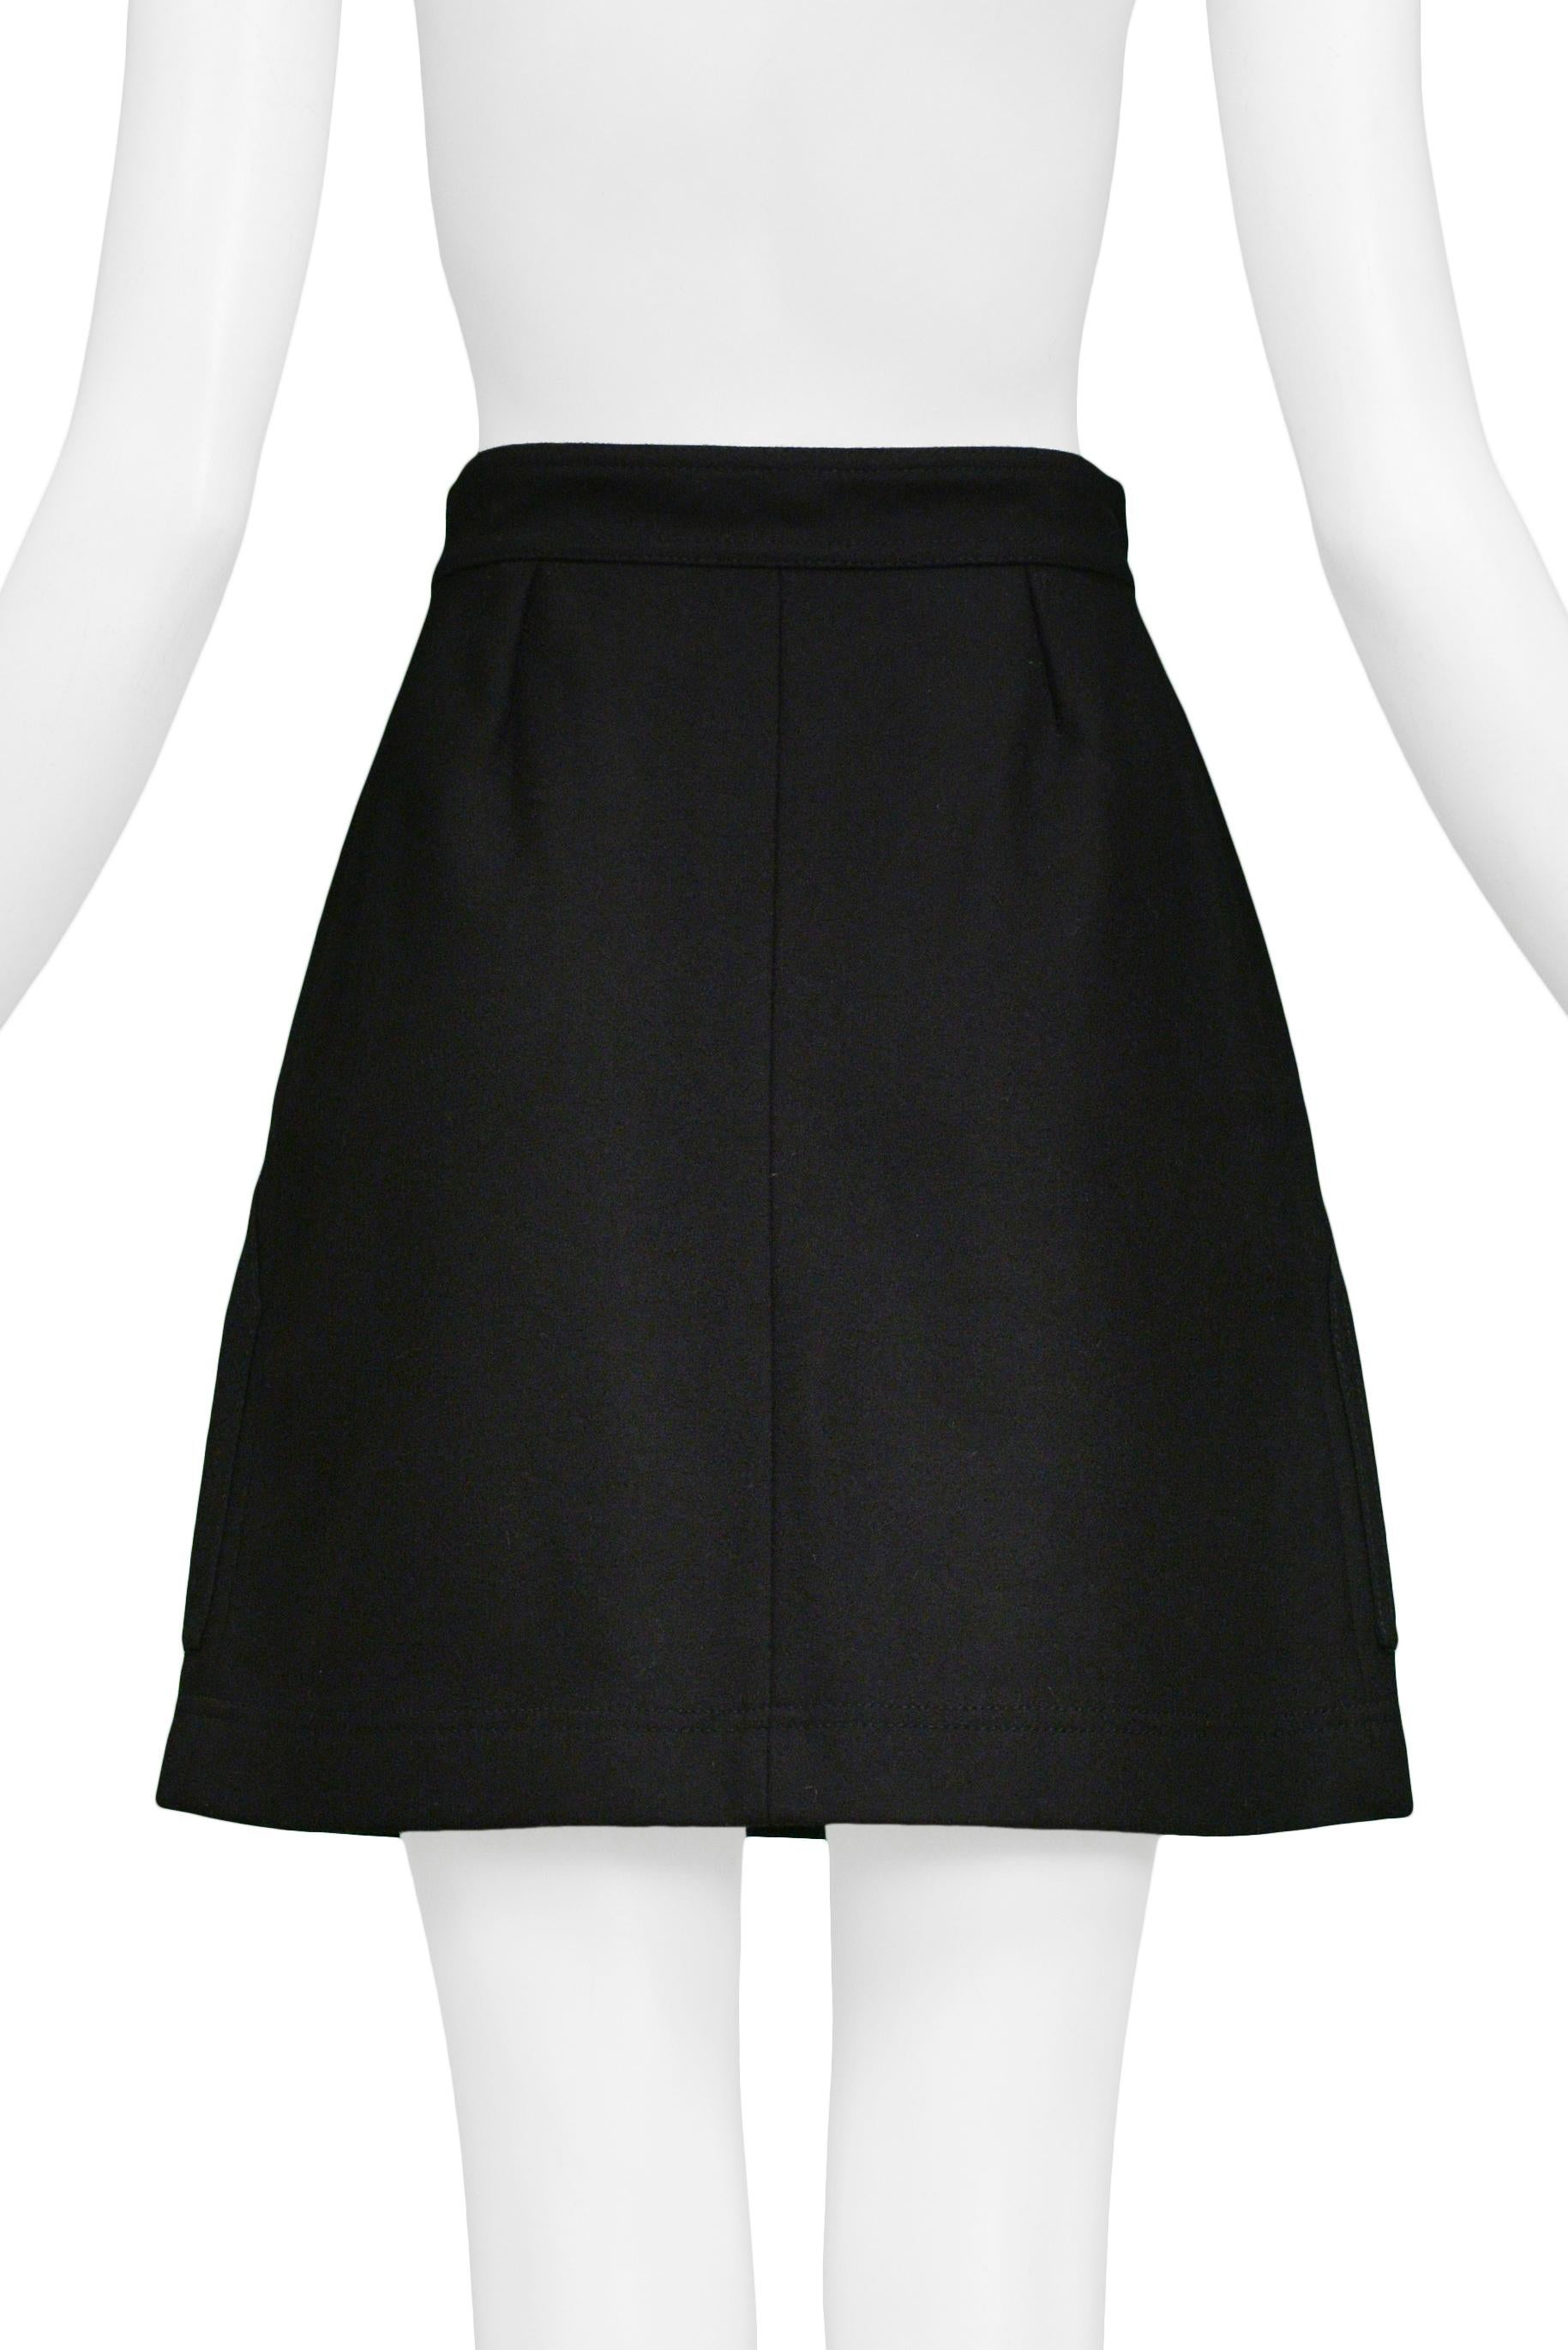 Women's Balenciaga By Ghesquere Classic Black A-Line Mini Skirt 2003 For Sale